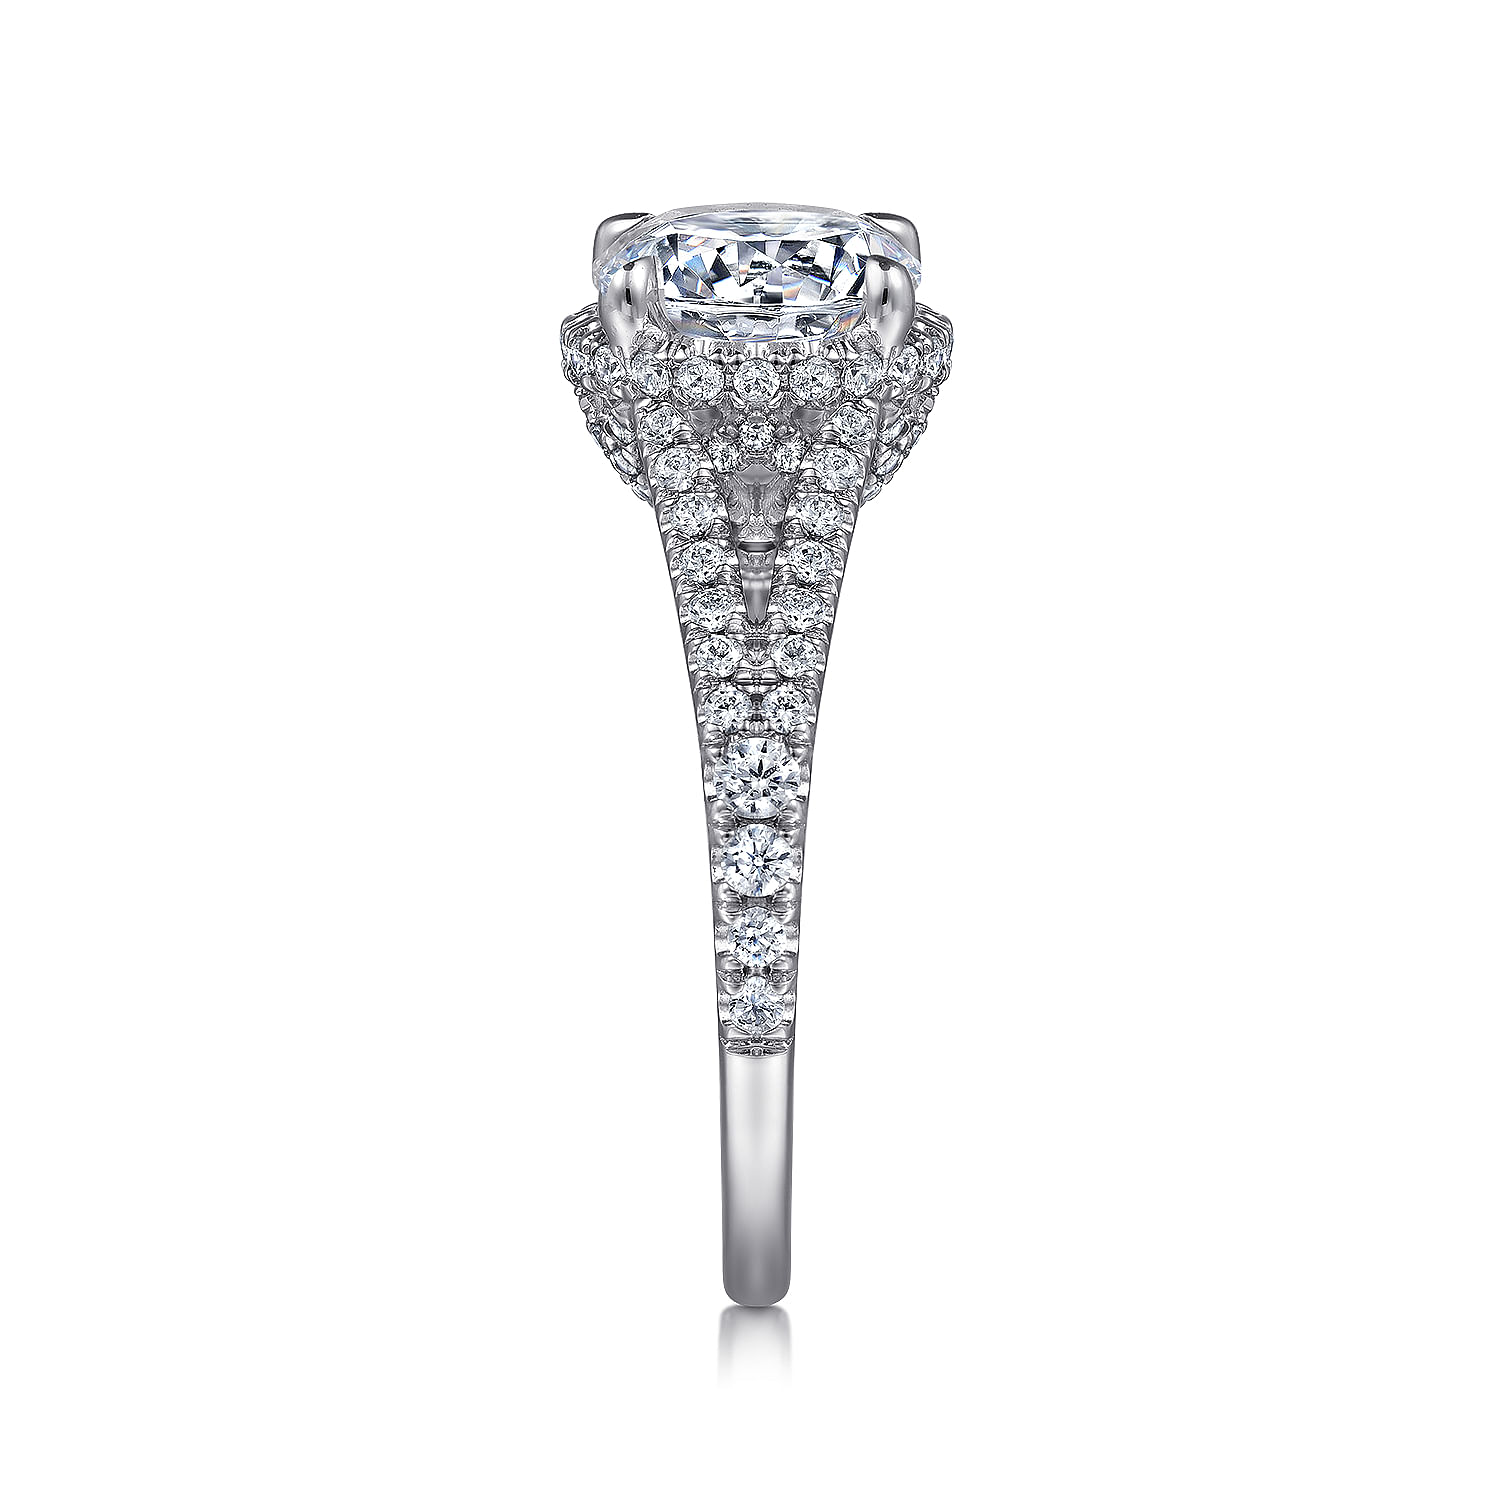 18K White Gold Hidden Halo 
Round Diamond Engagement Ring